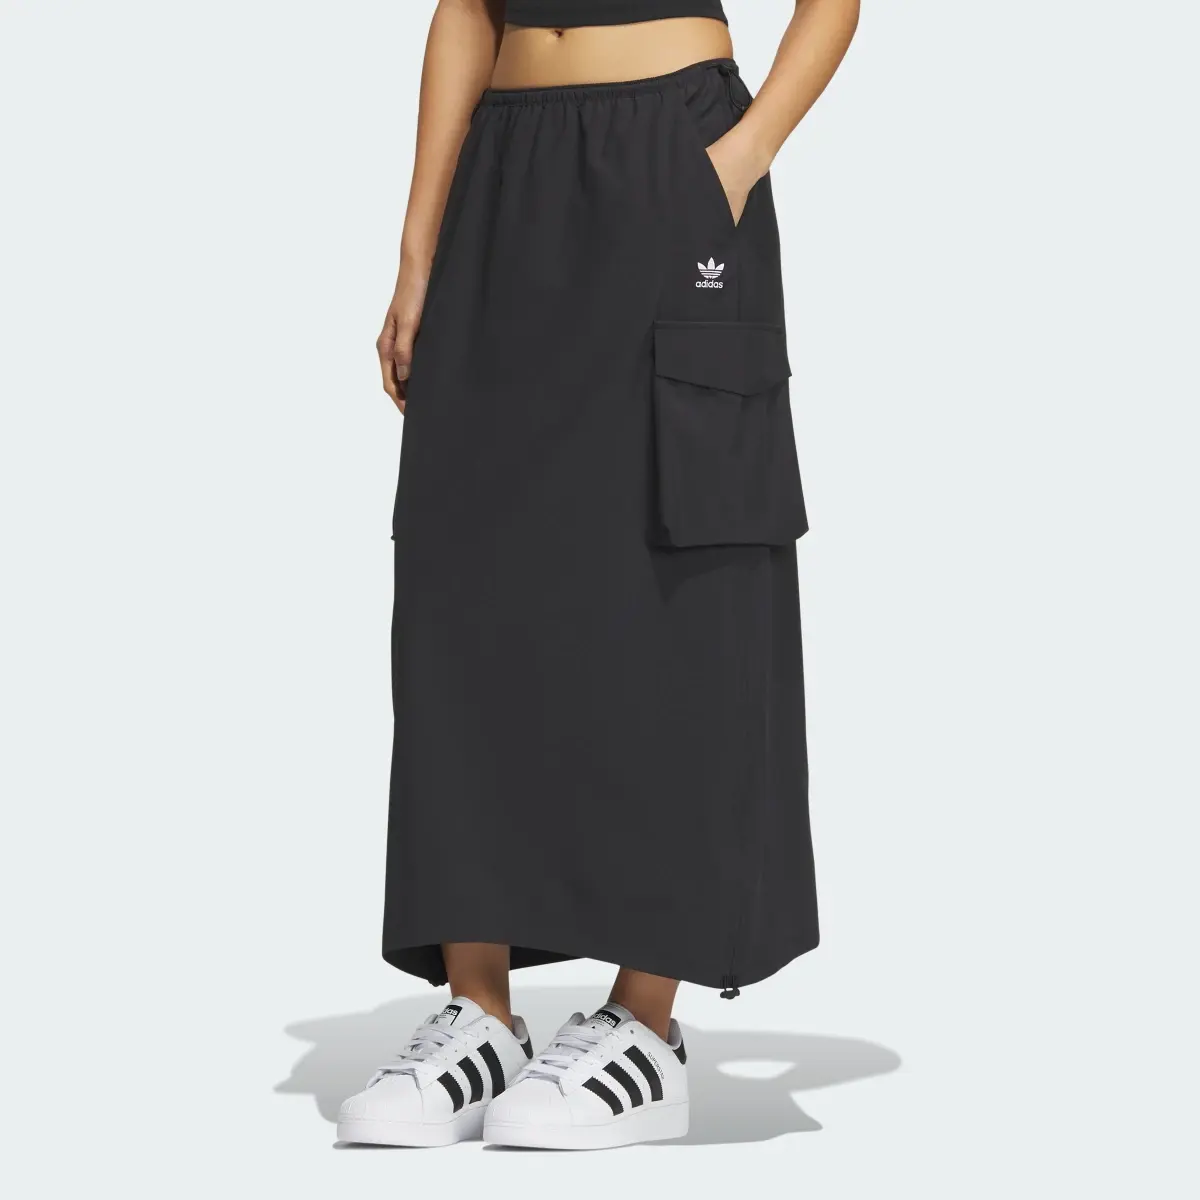 Adidas Cargo Skirt. 1